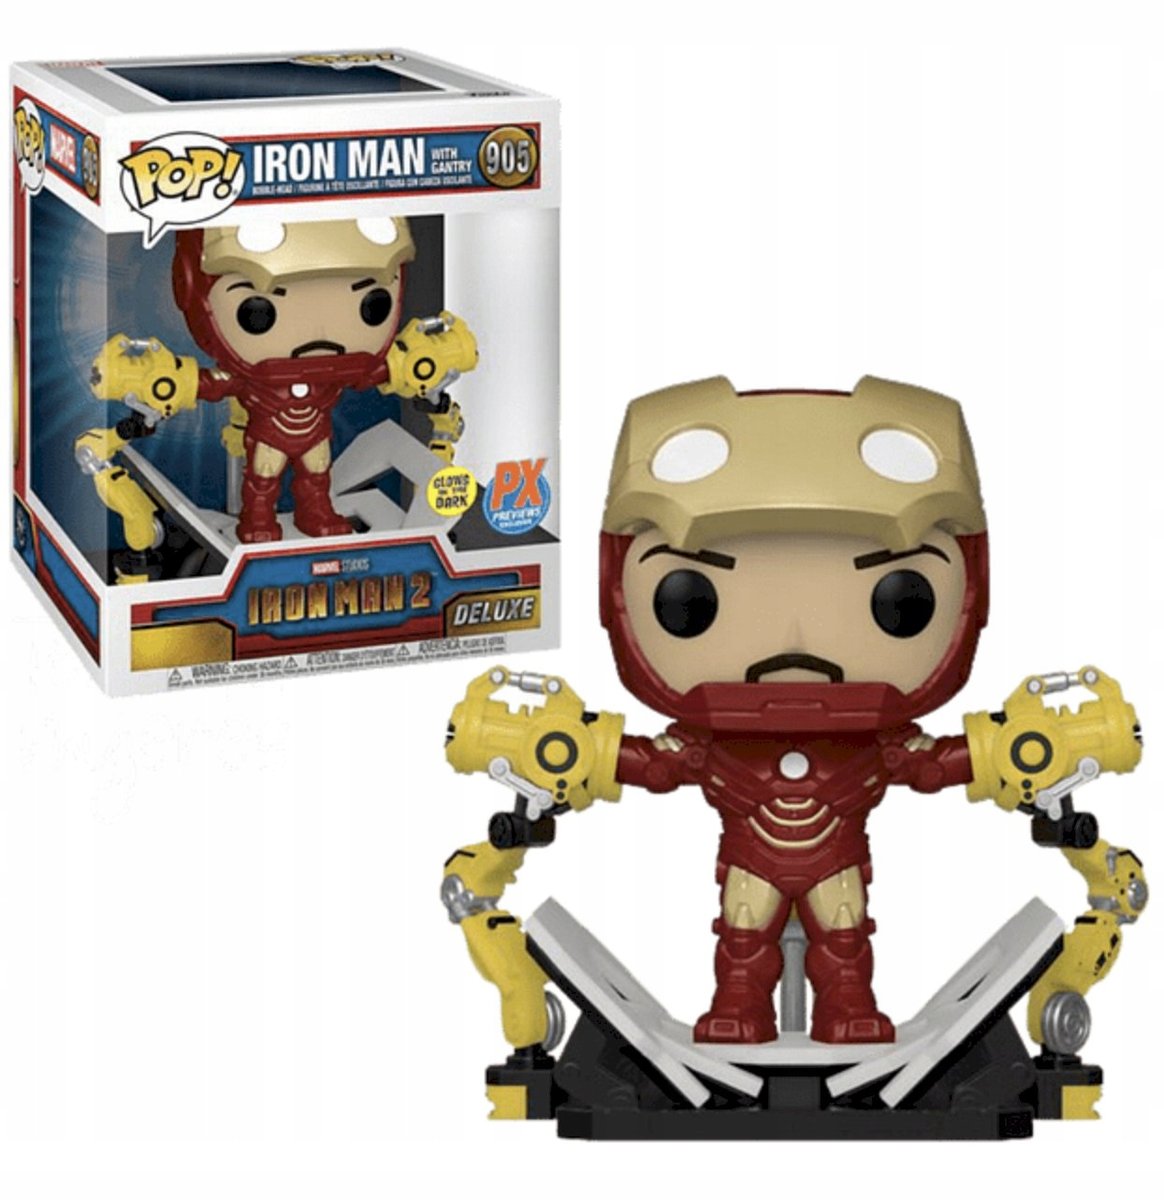 Zdjęcia - Figurka / zabawka transformująca Funko Pop! Marvel Iron Man Mark Iv Xl 905 